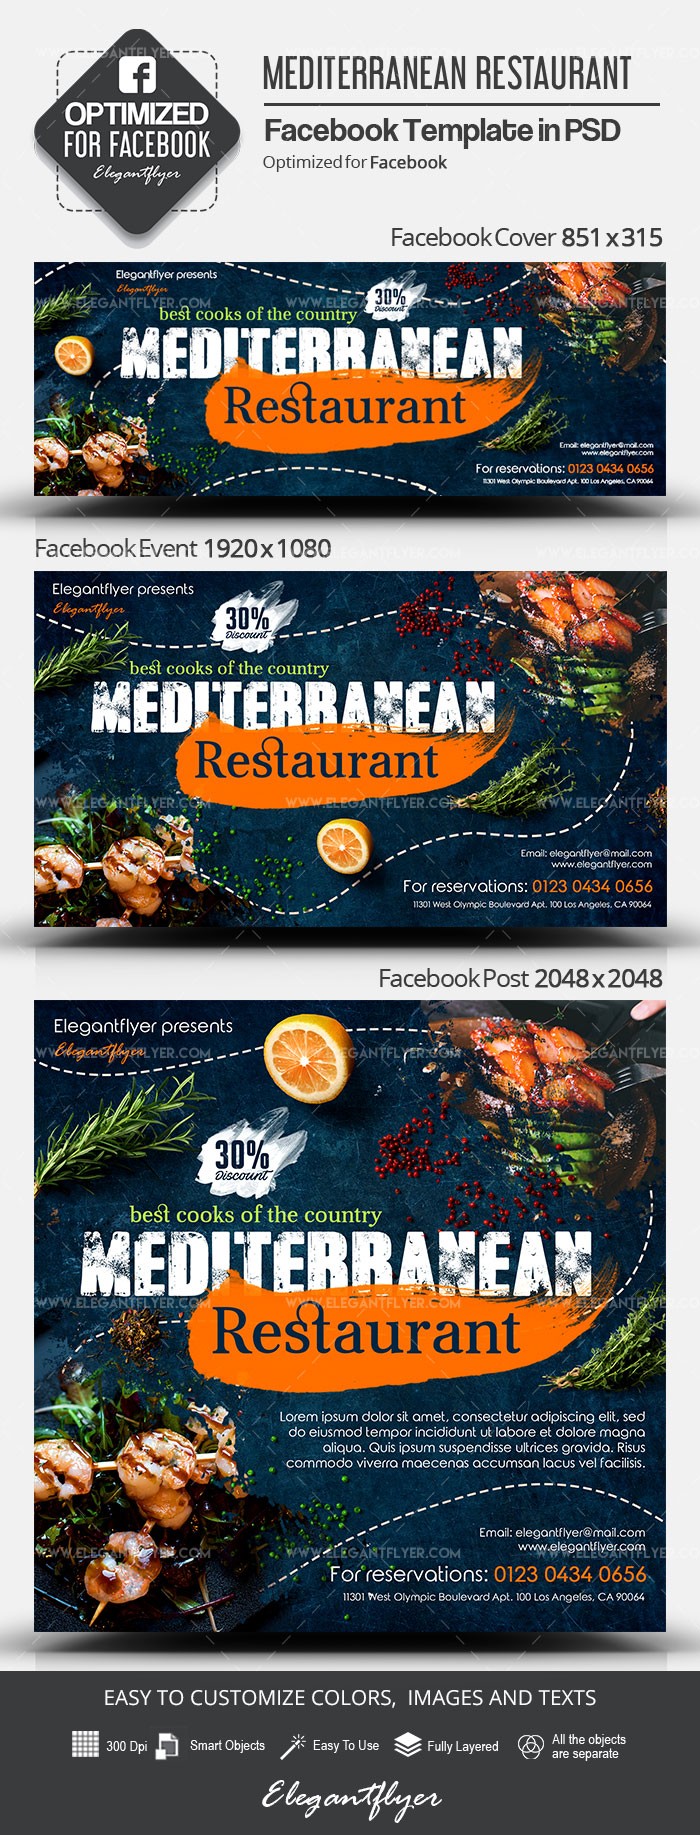 Restaurant méditerranéen sur Facebook by ElegantFlyer